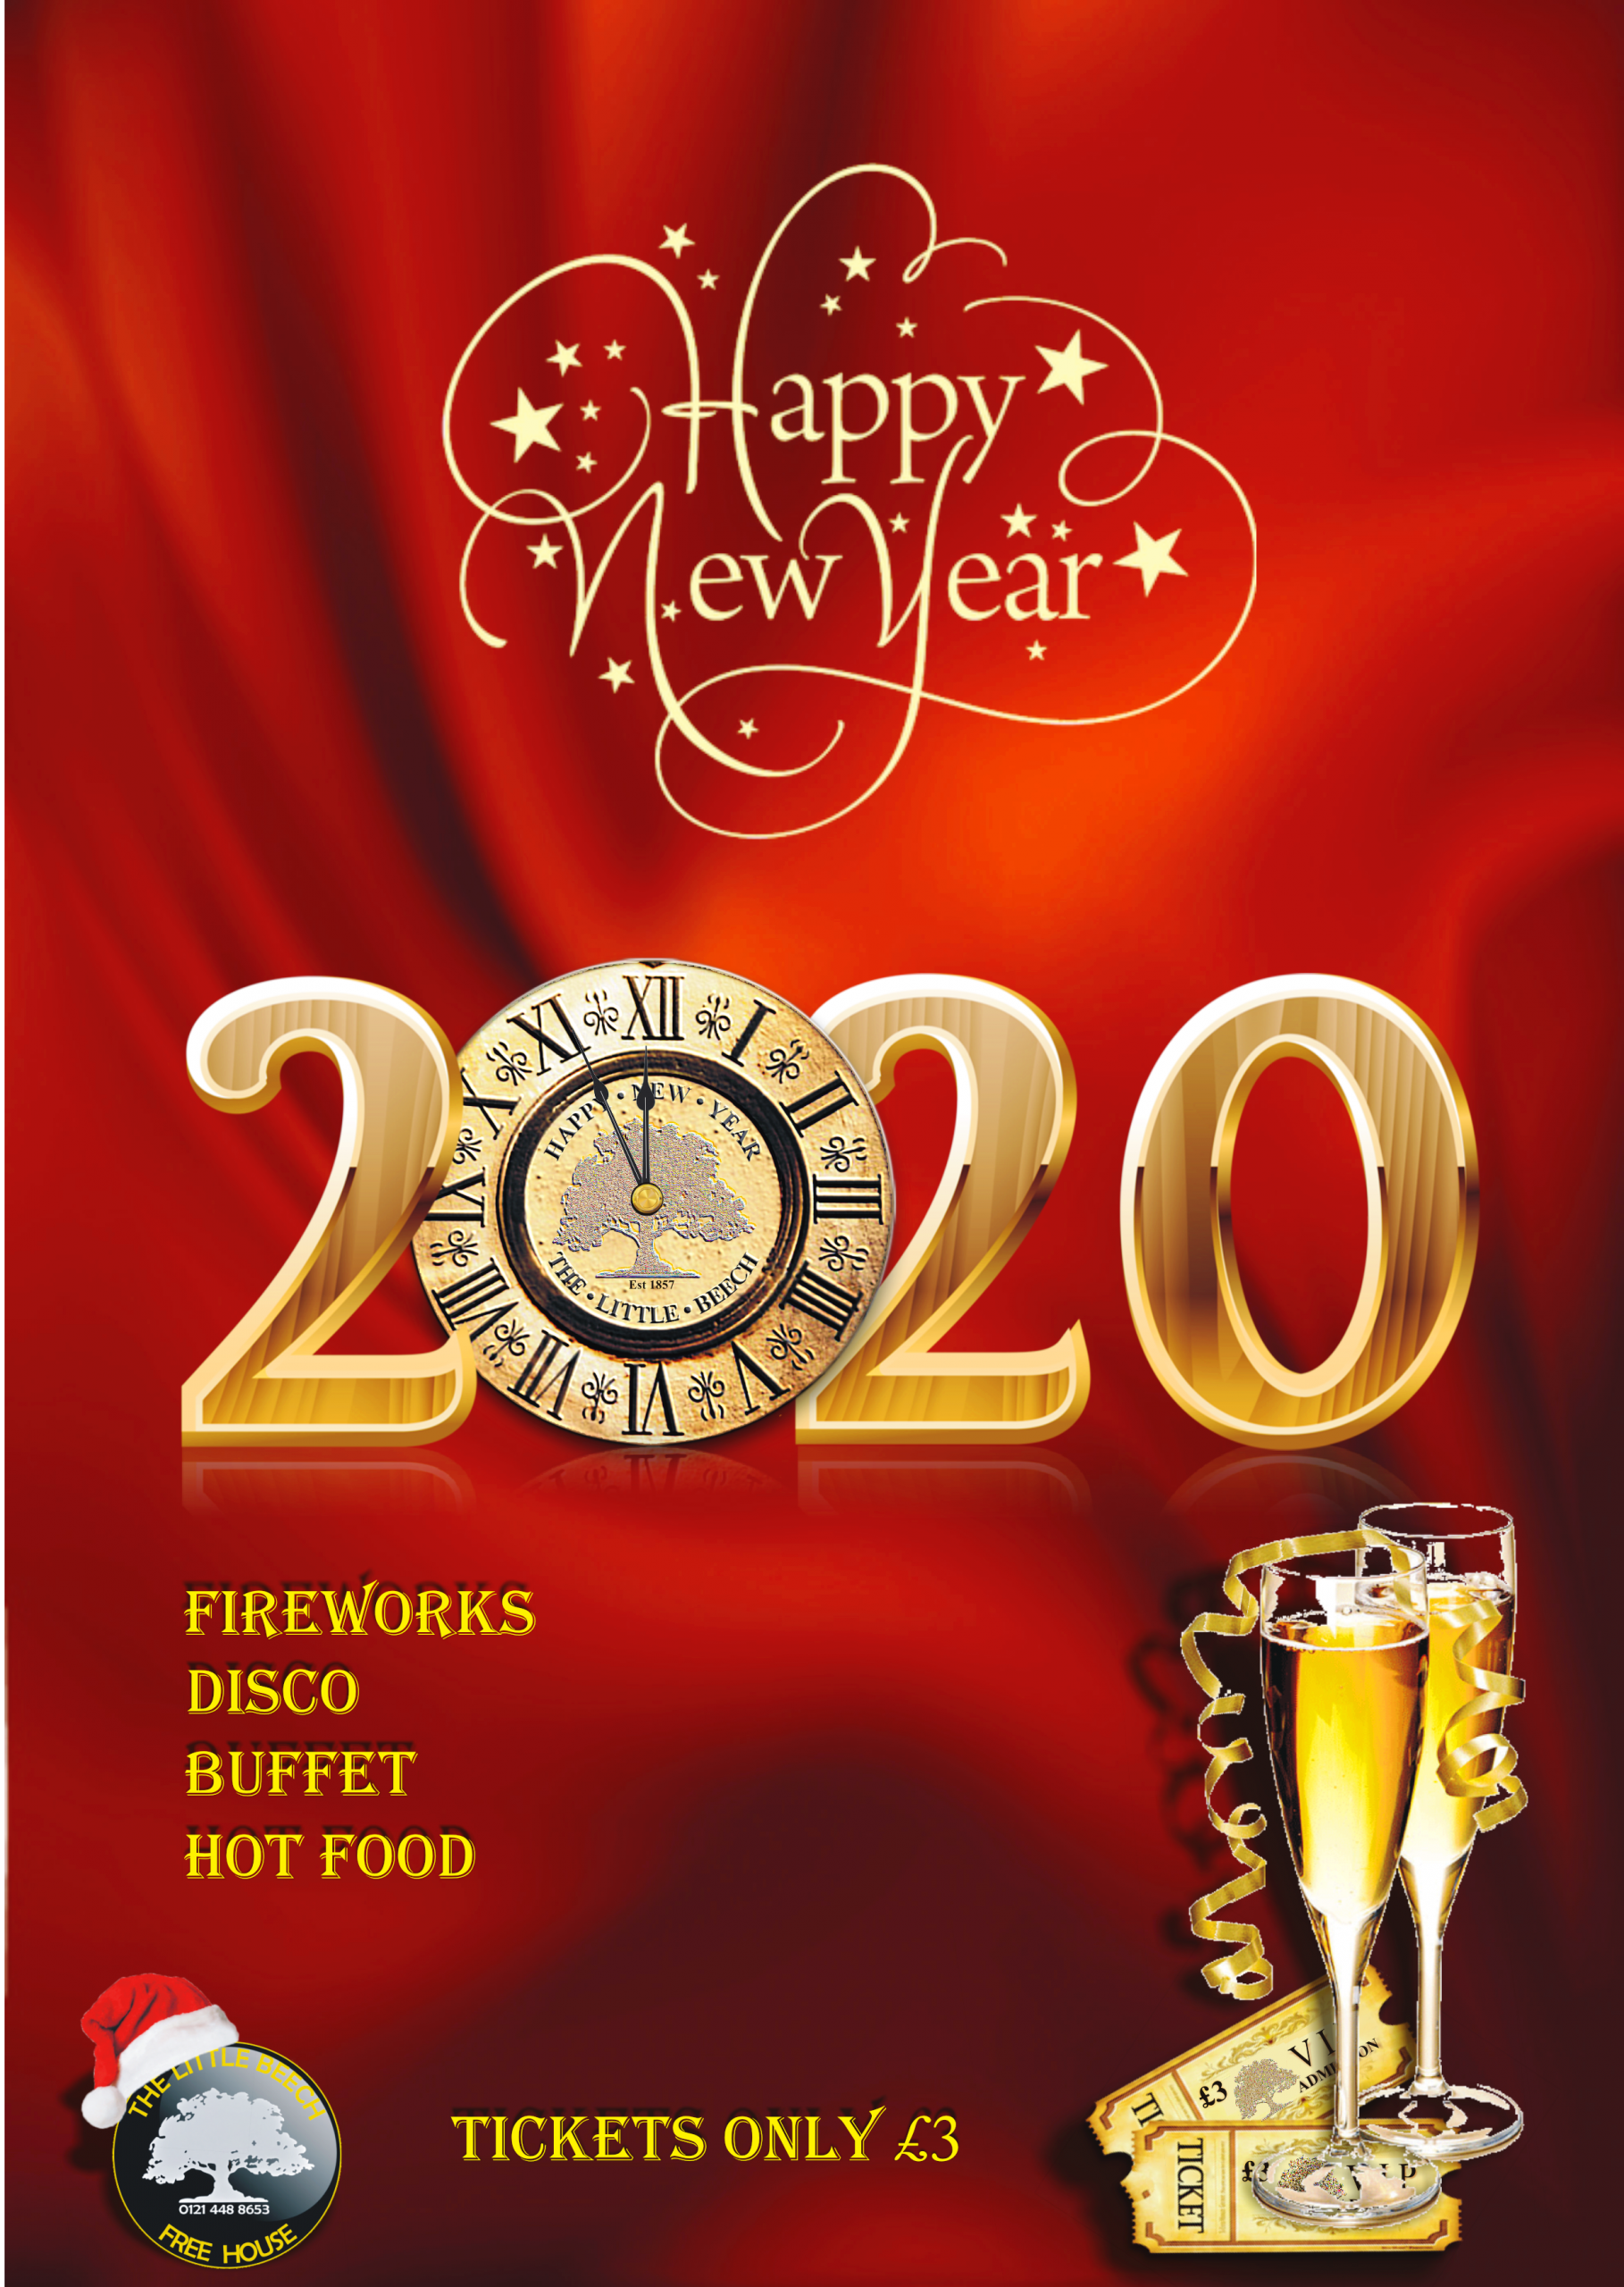 The-Little-Beech-Pub-Blackheath-New-Years-Party-2020